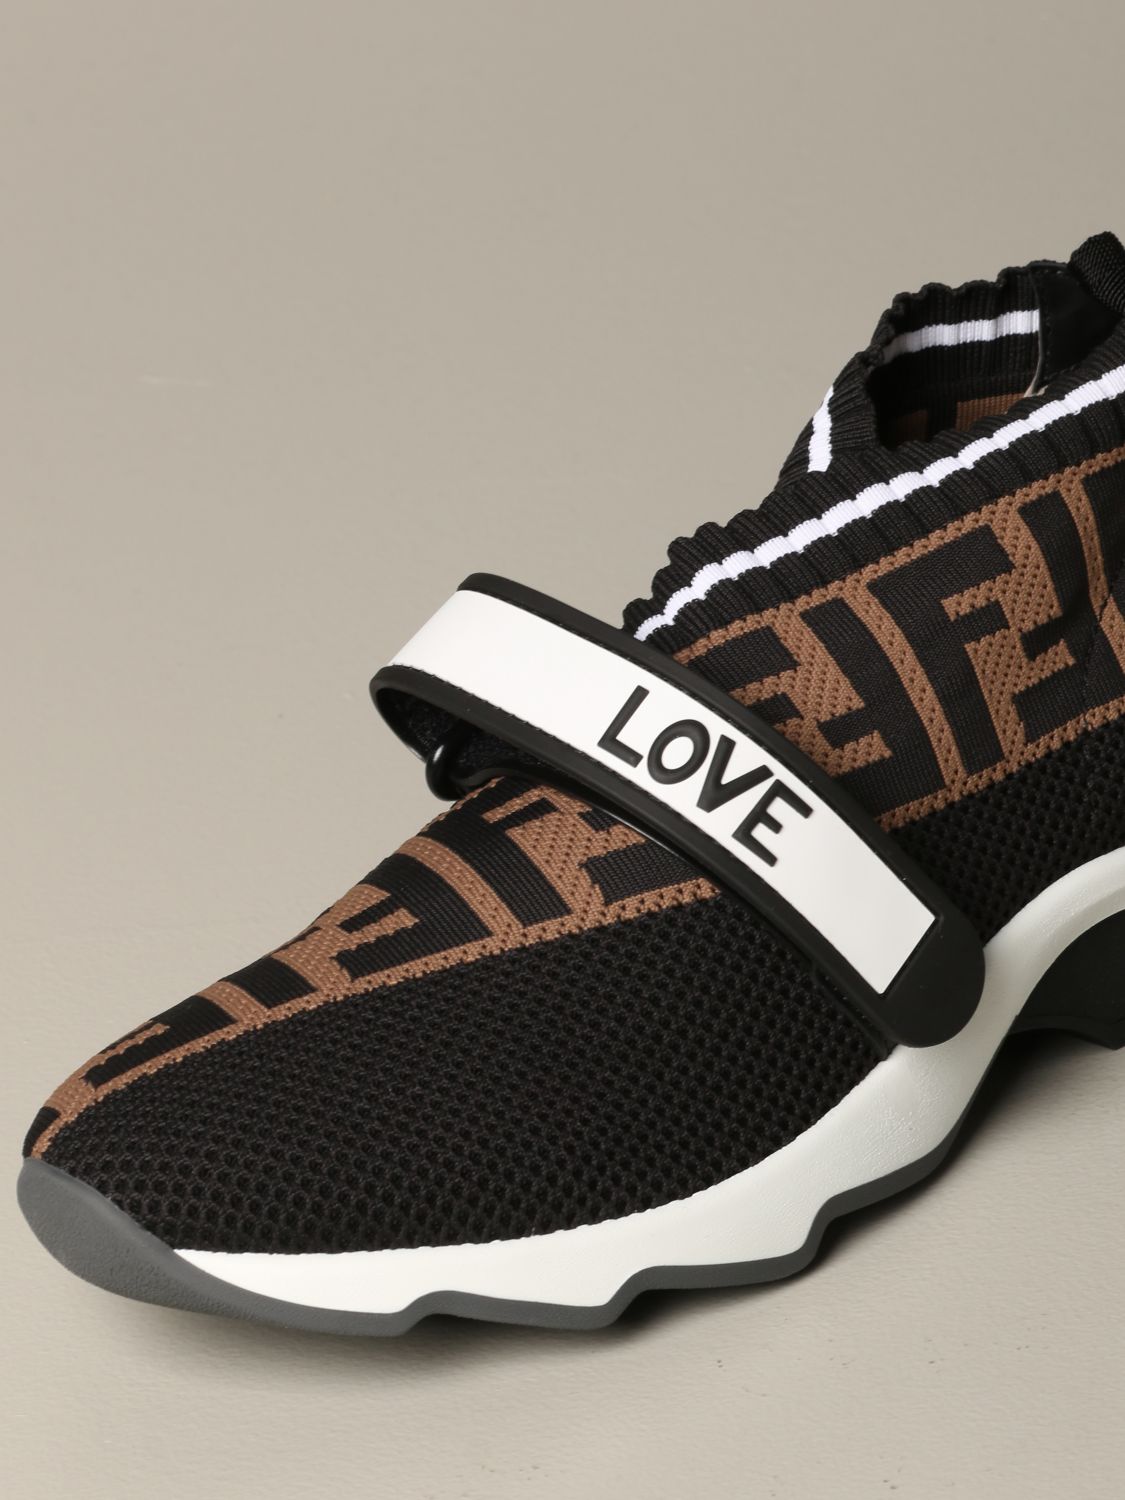 Buy > fendi love shoes > in stock